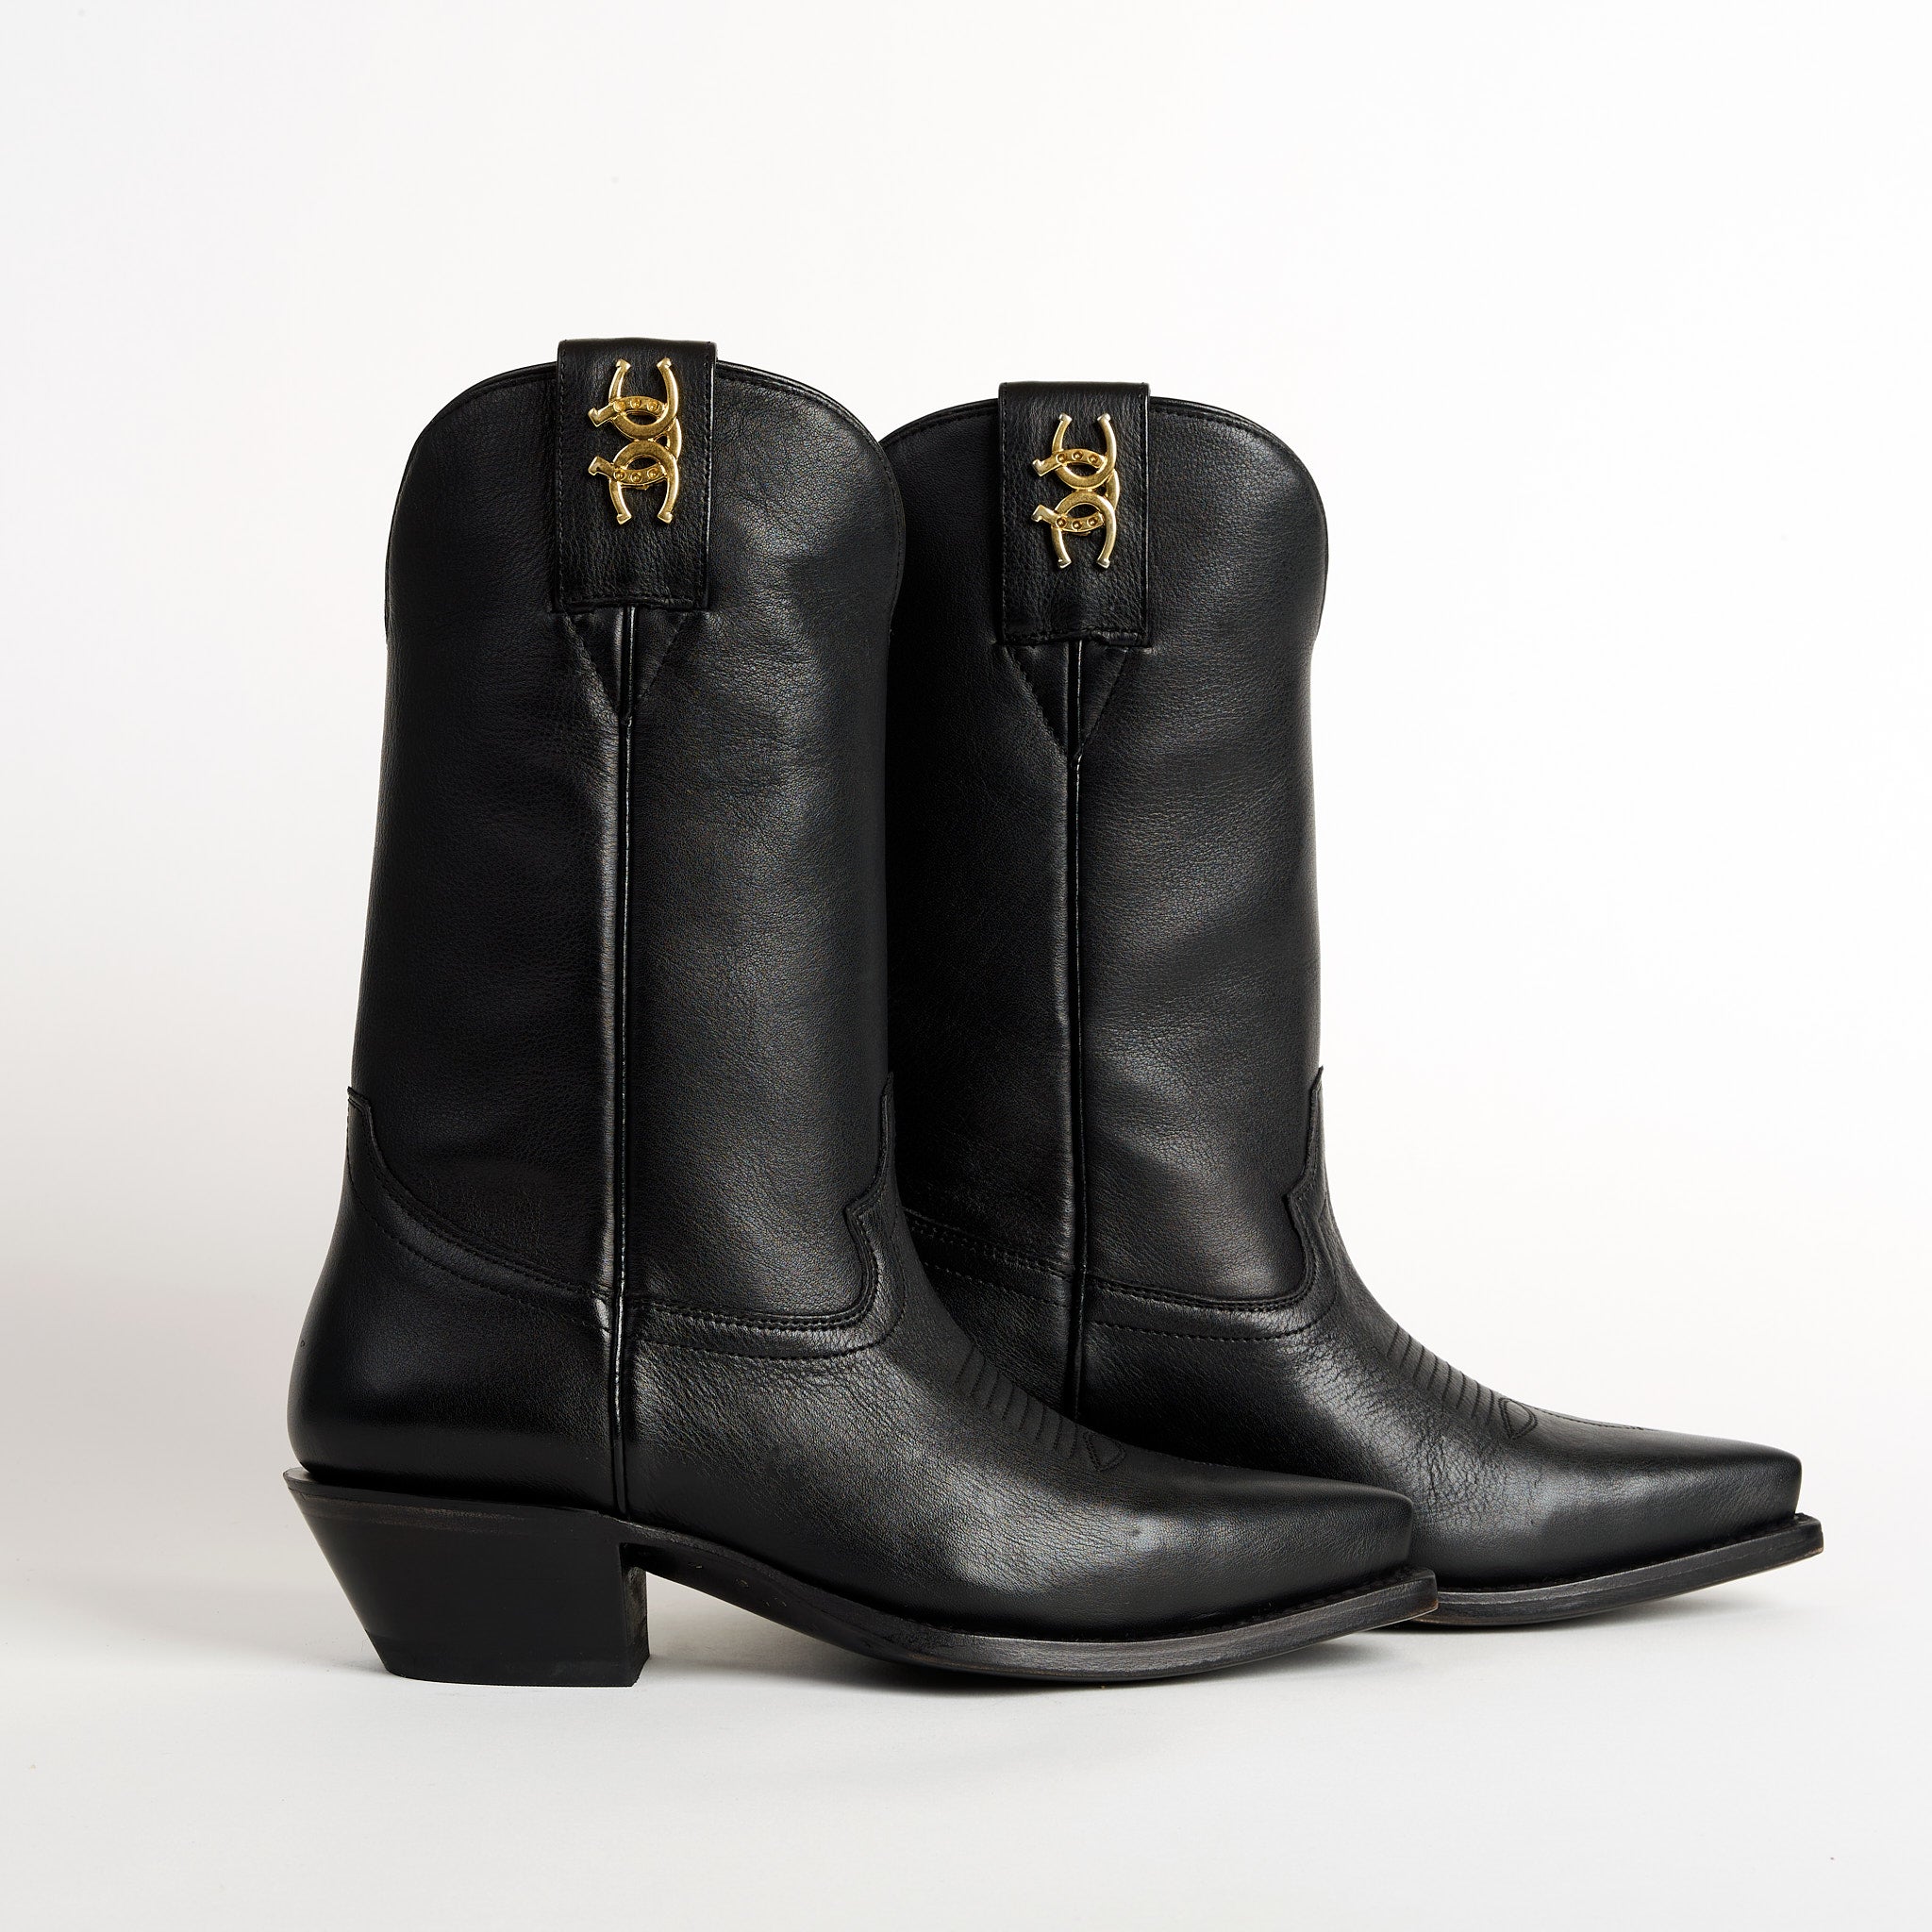 Cerrat Women's Dallas Cowboy Boots